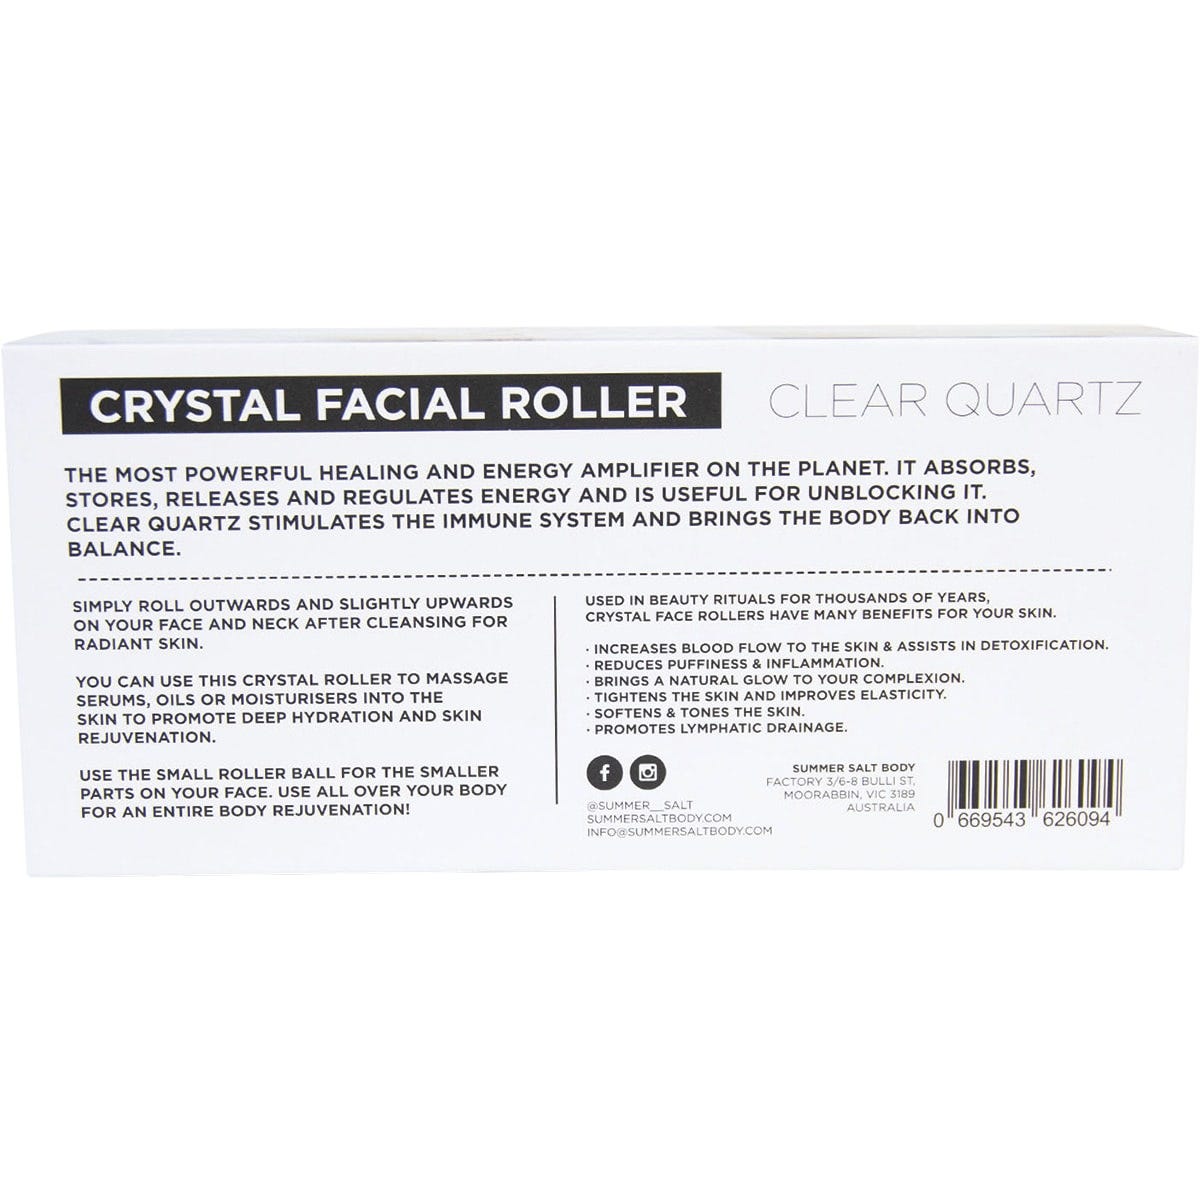 Summer Salt Body Crystal Facial Roller Clear Quartz